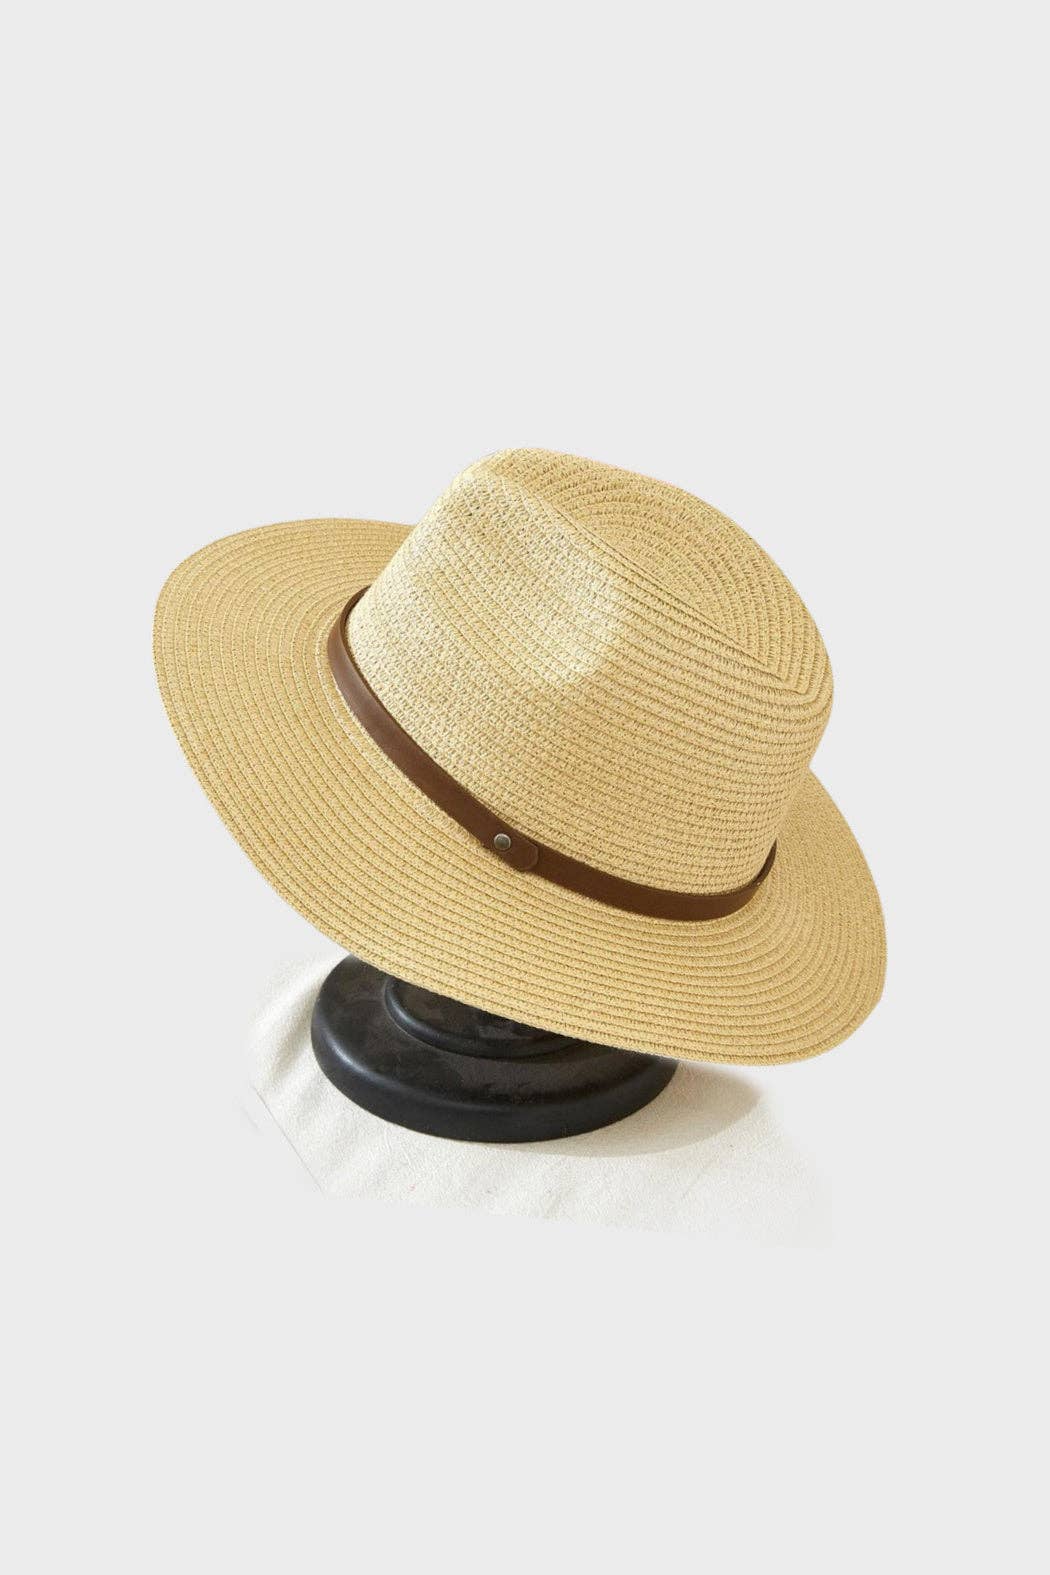 Embellish Your Life - Vegan Brown Leather Straw Panama Hat